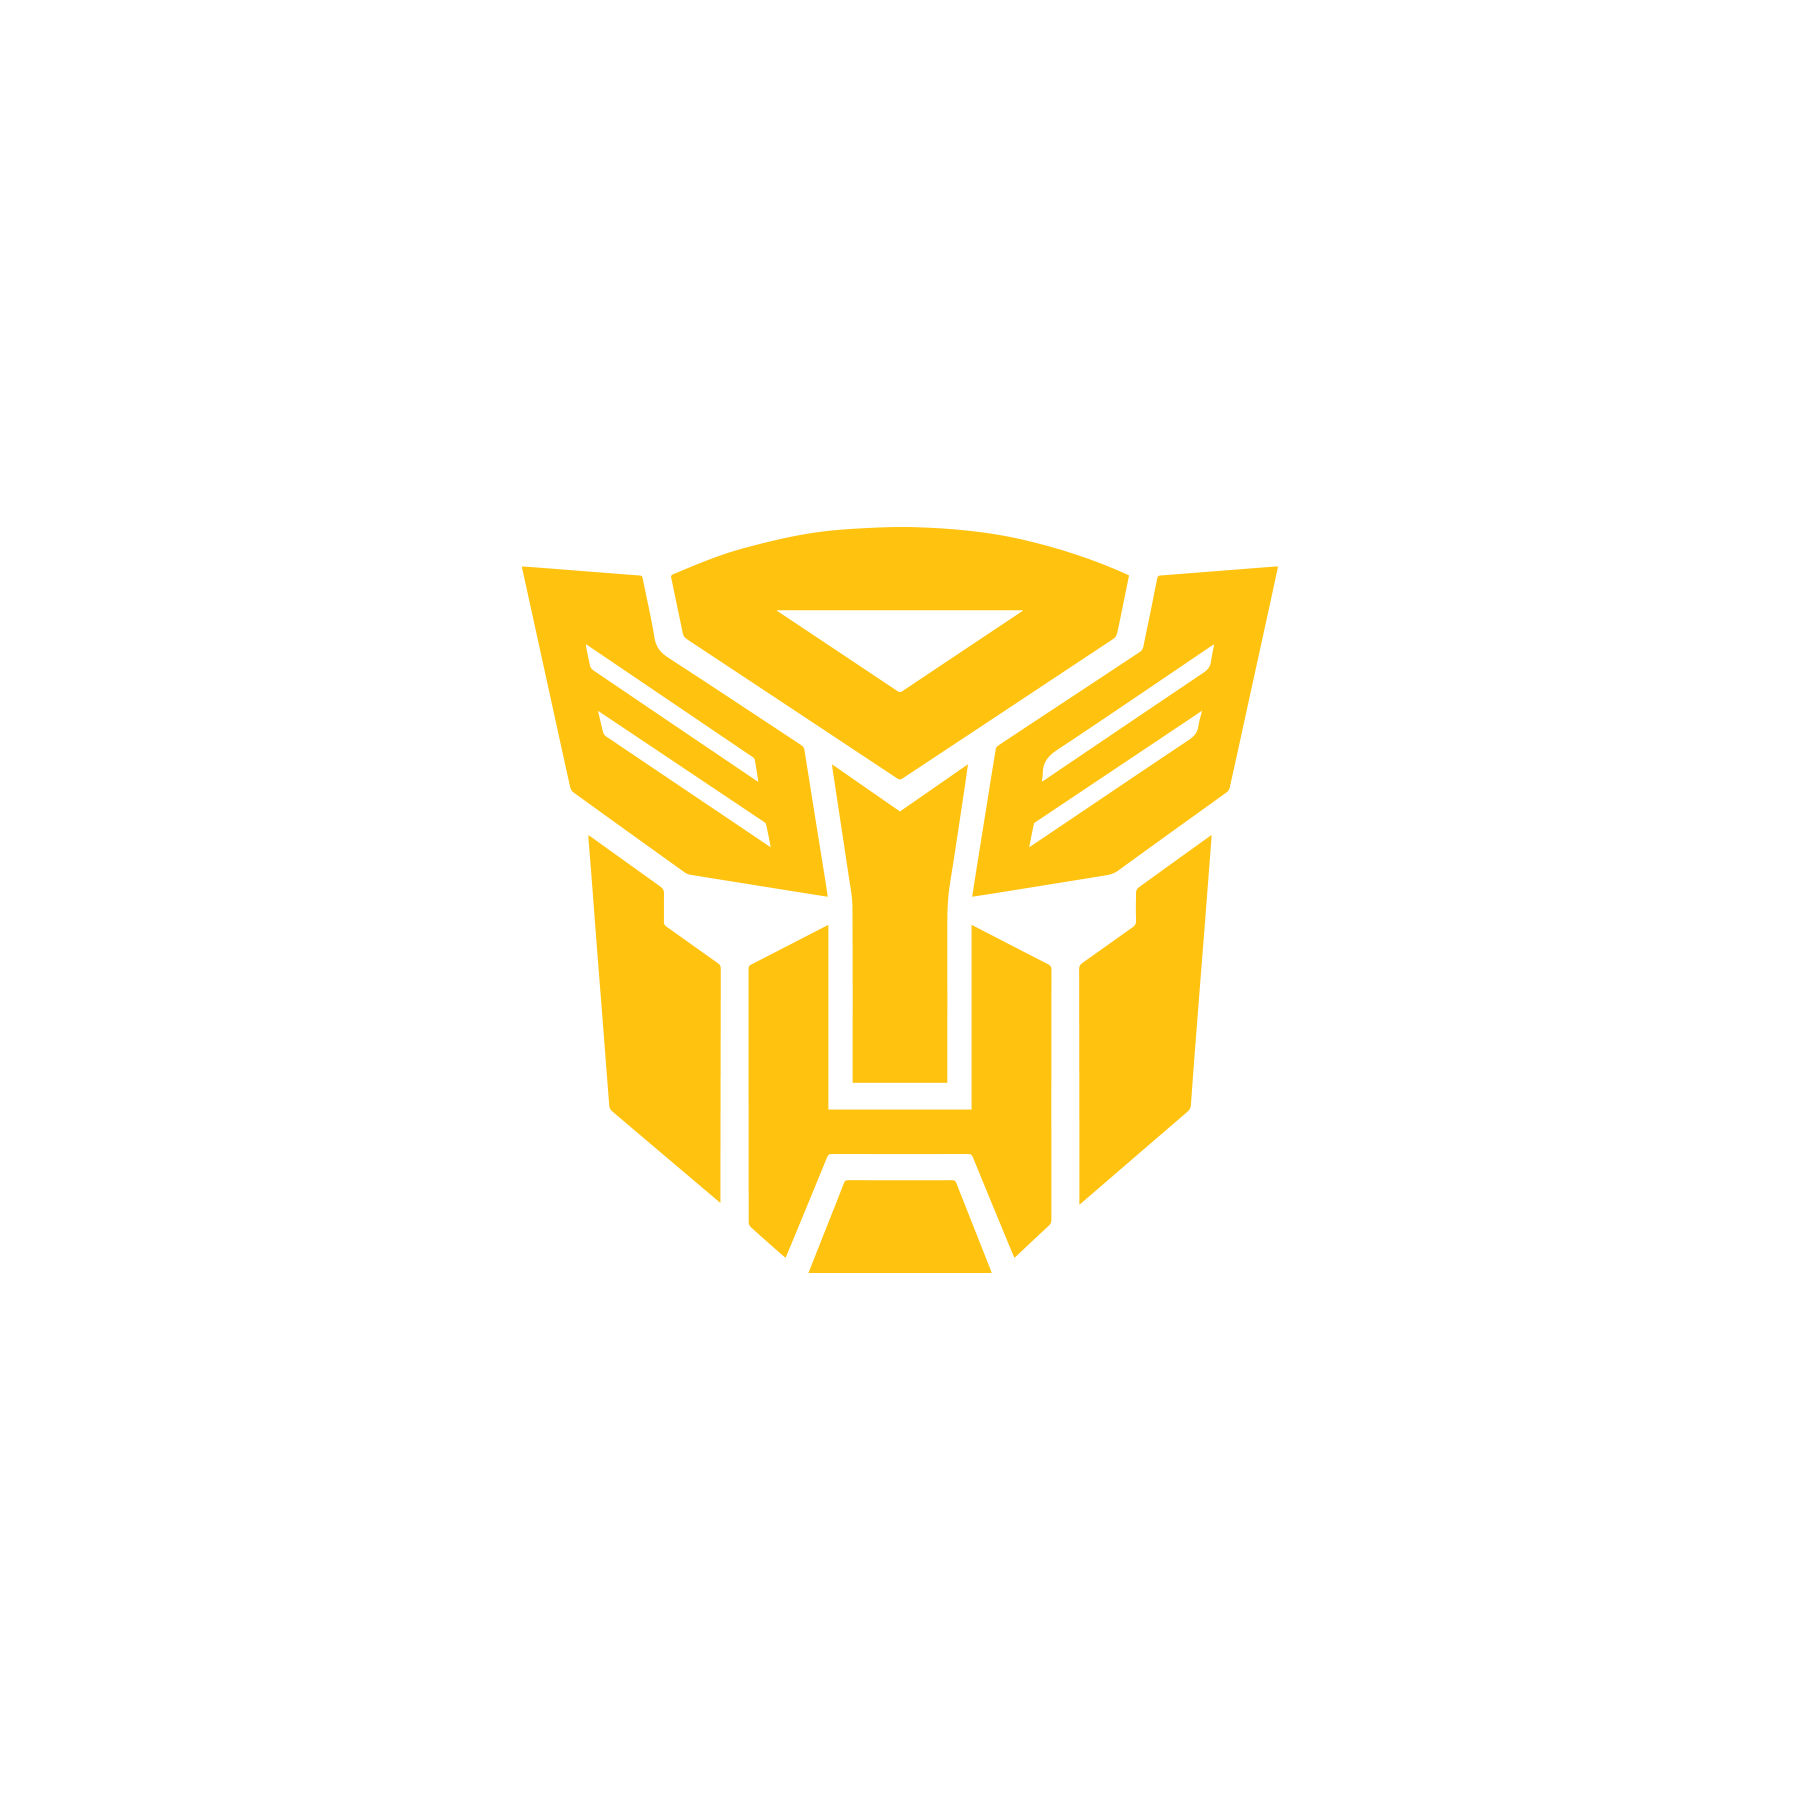 Transformers Neo Faction Symbols by Daizua123 on DeviantArt